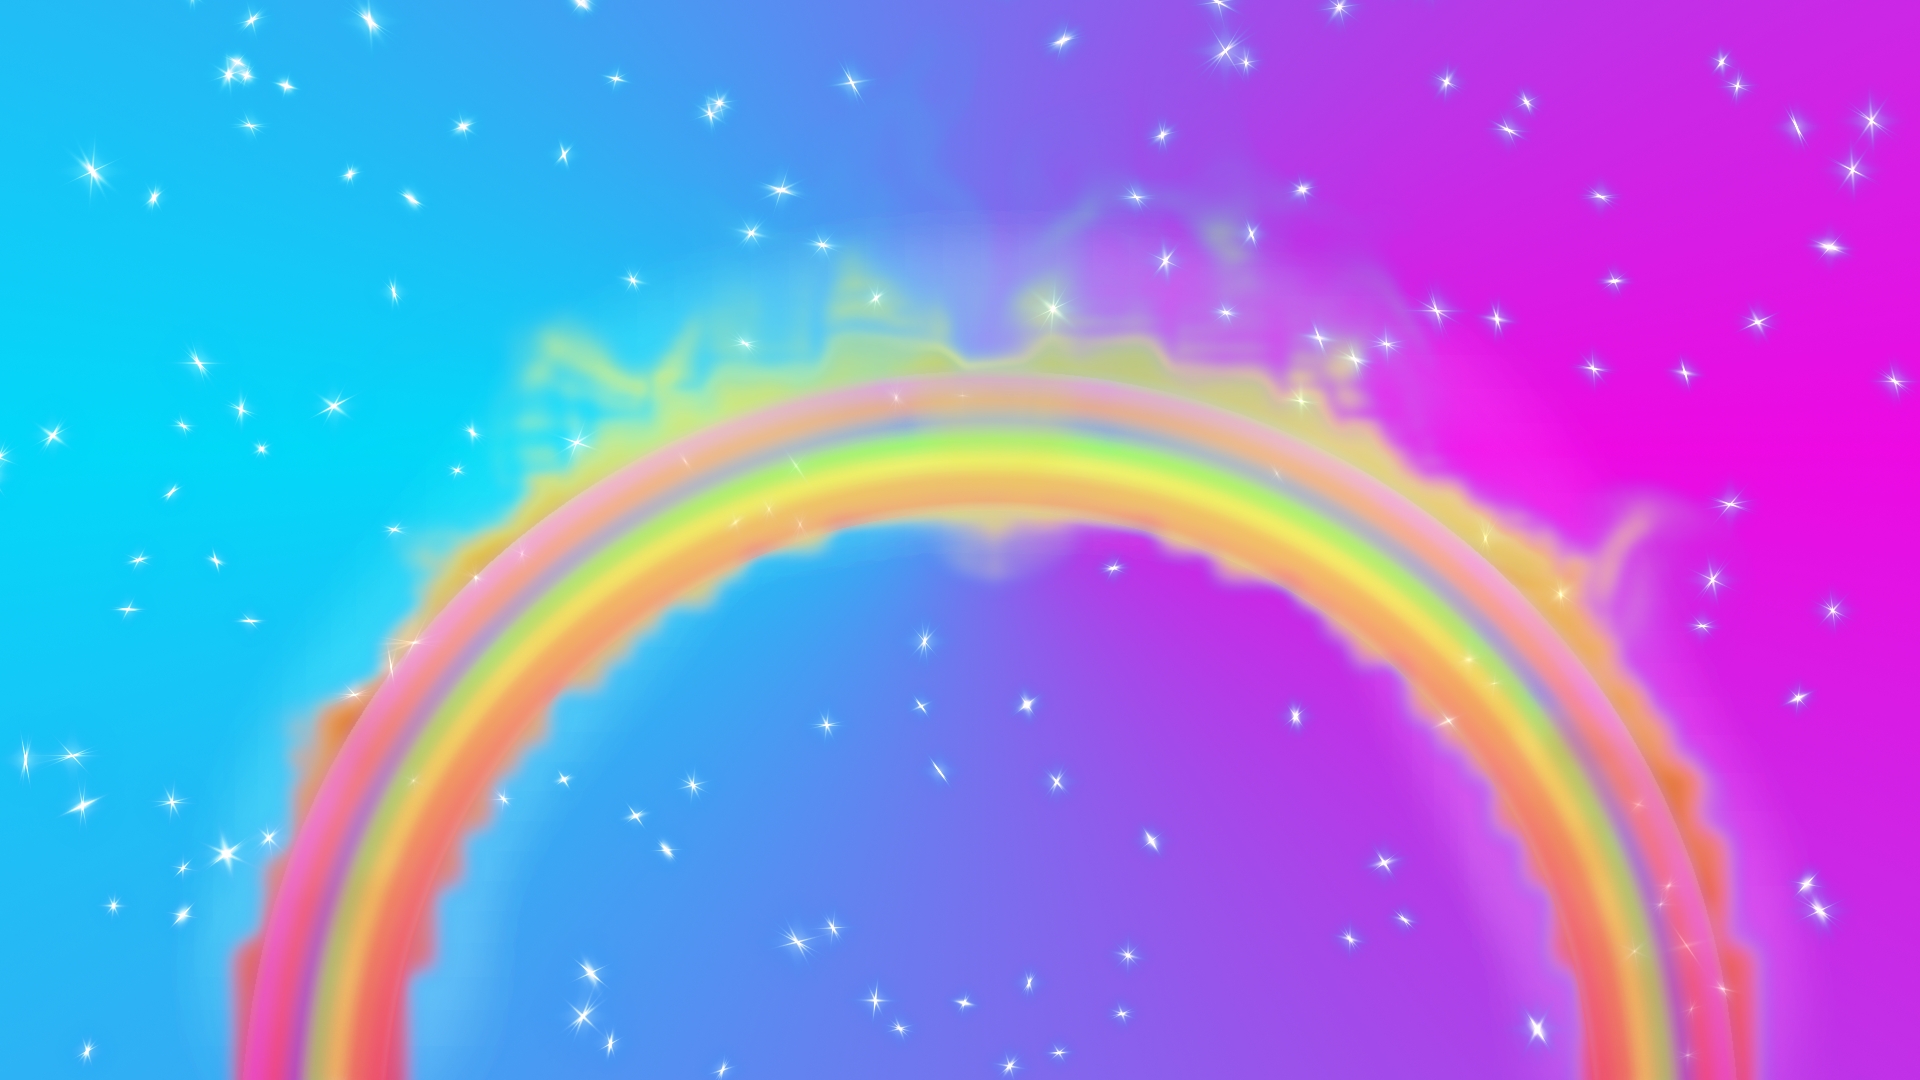 Rainbow backgrounds